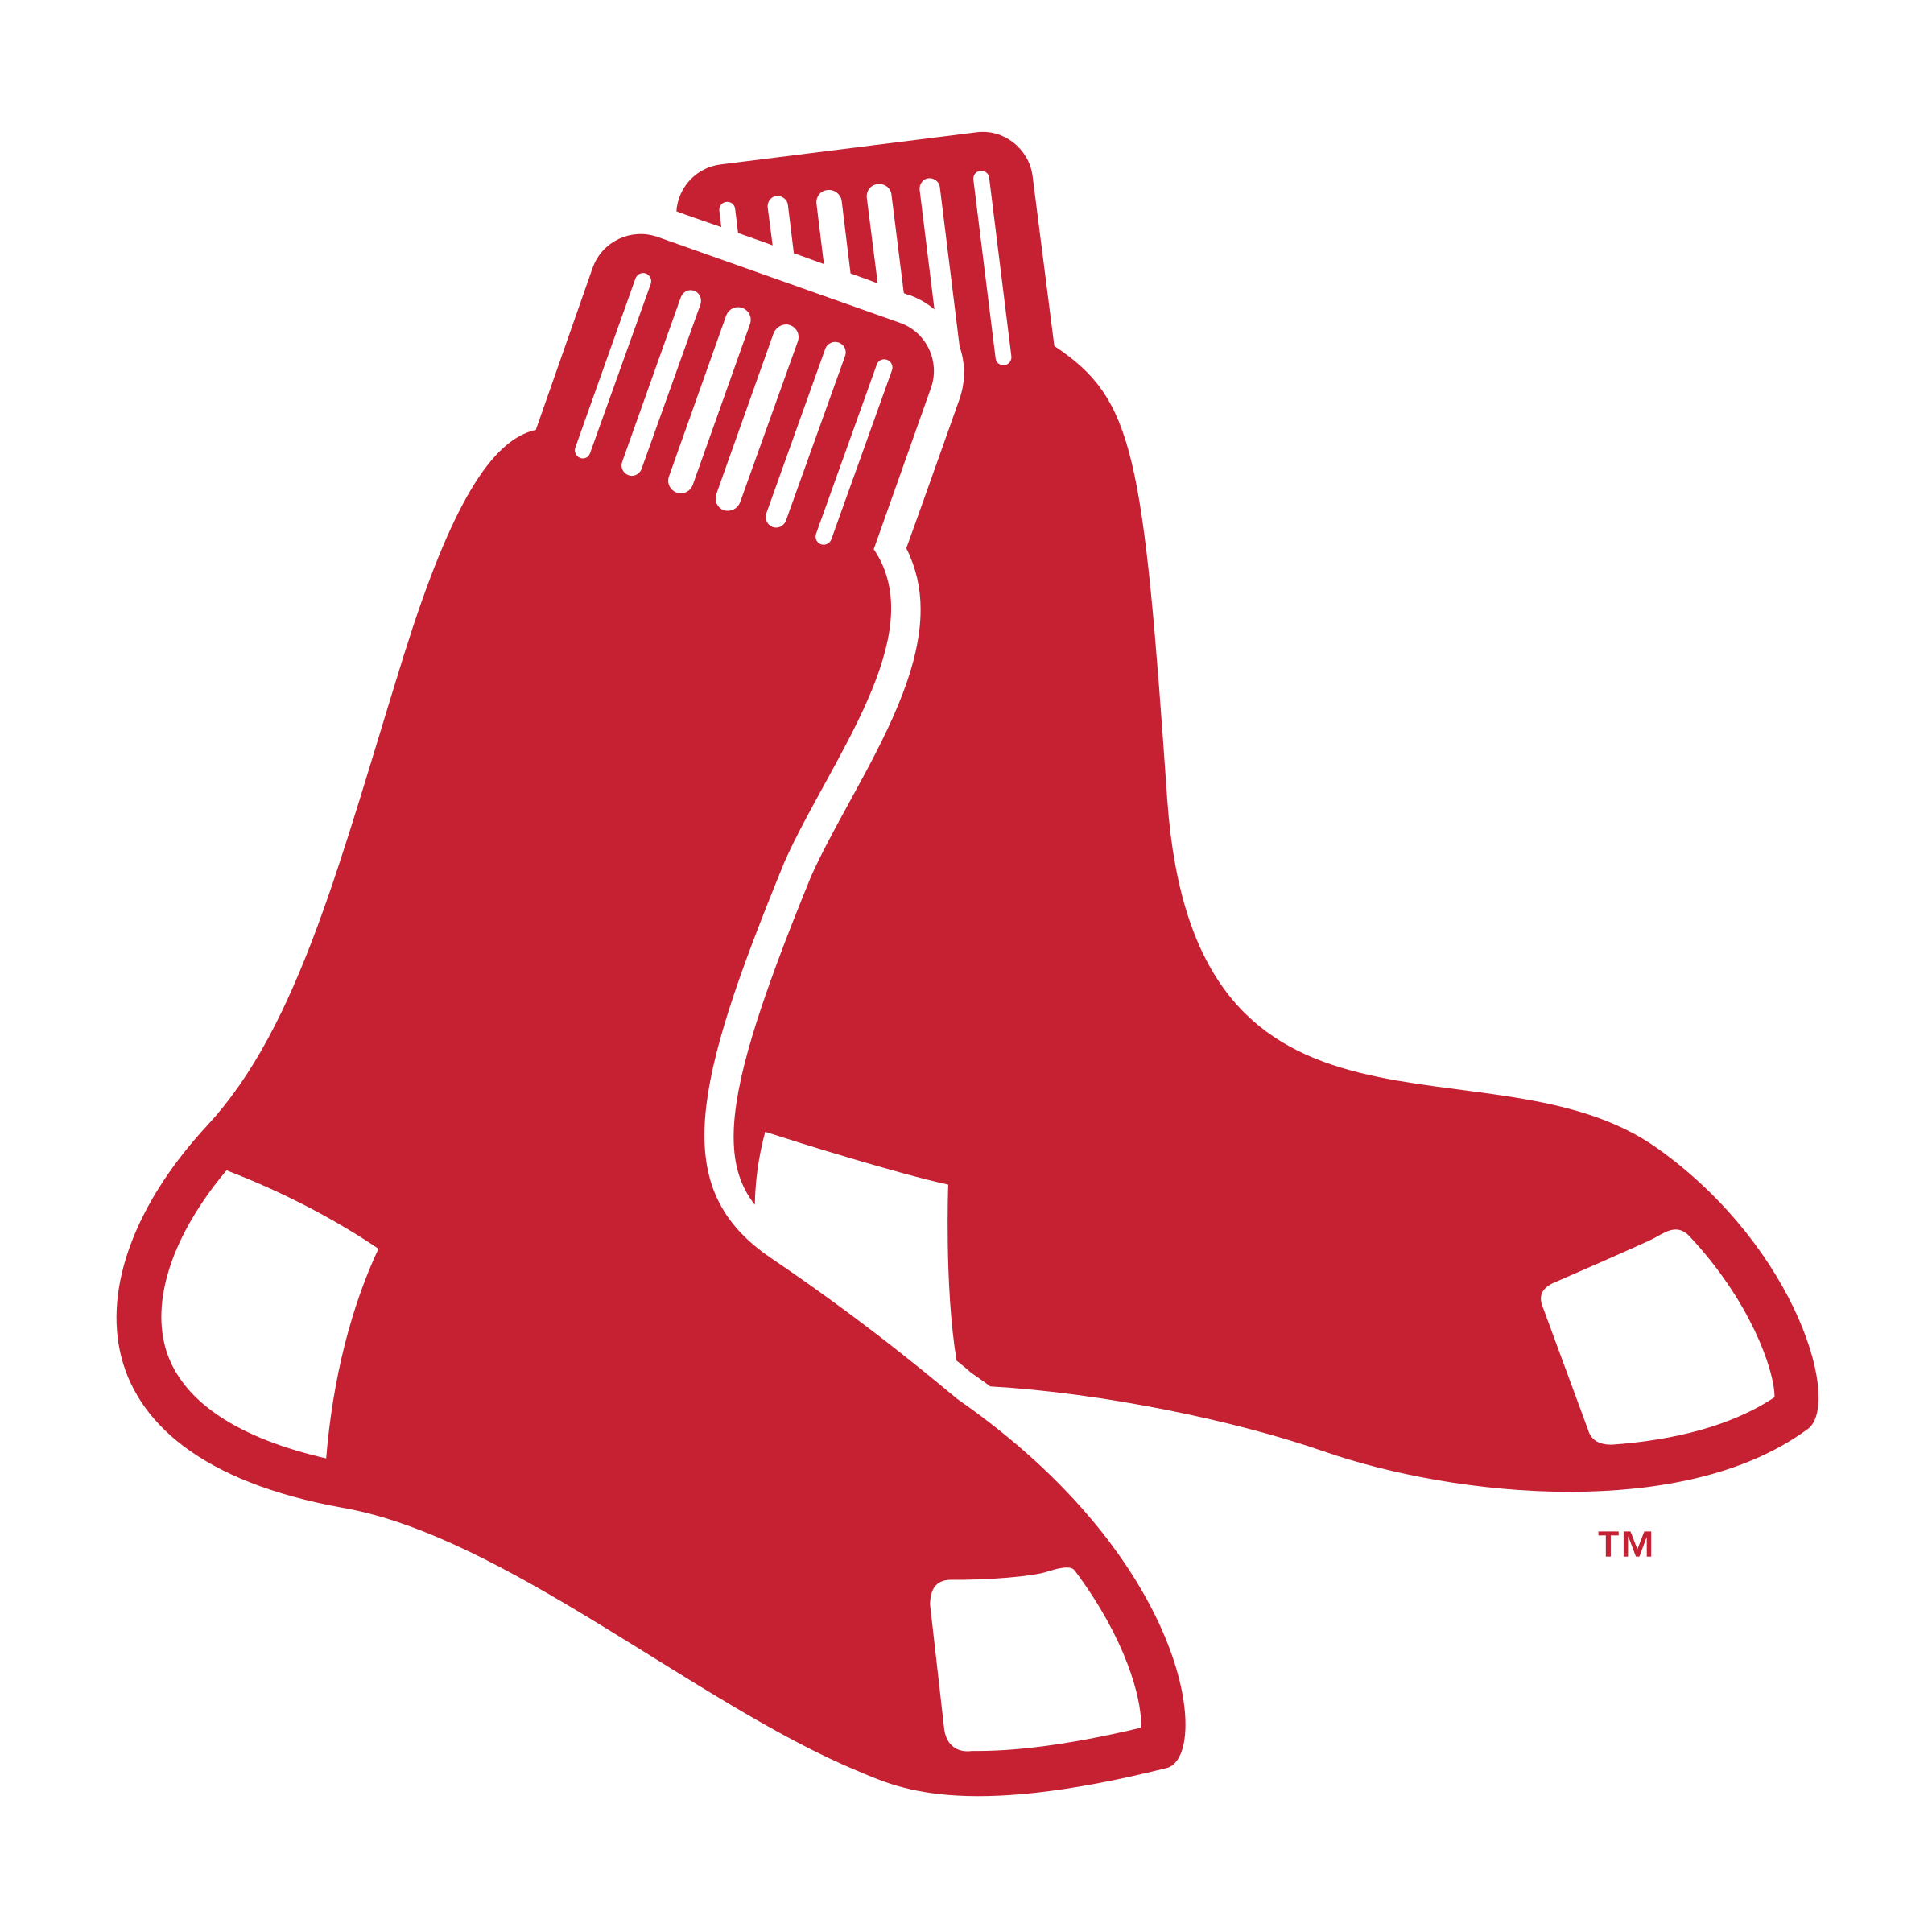 Red Socks Logo - Boston Red Sox Logo PNG Transparent & SVG Vector - Freebie Supply